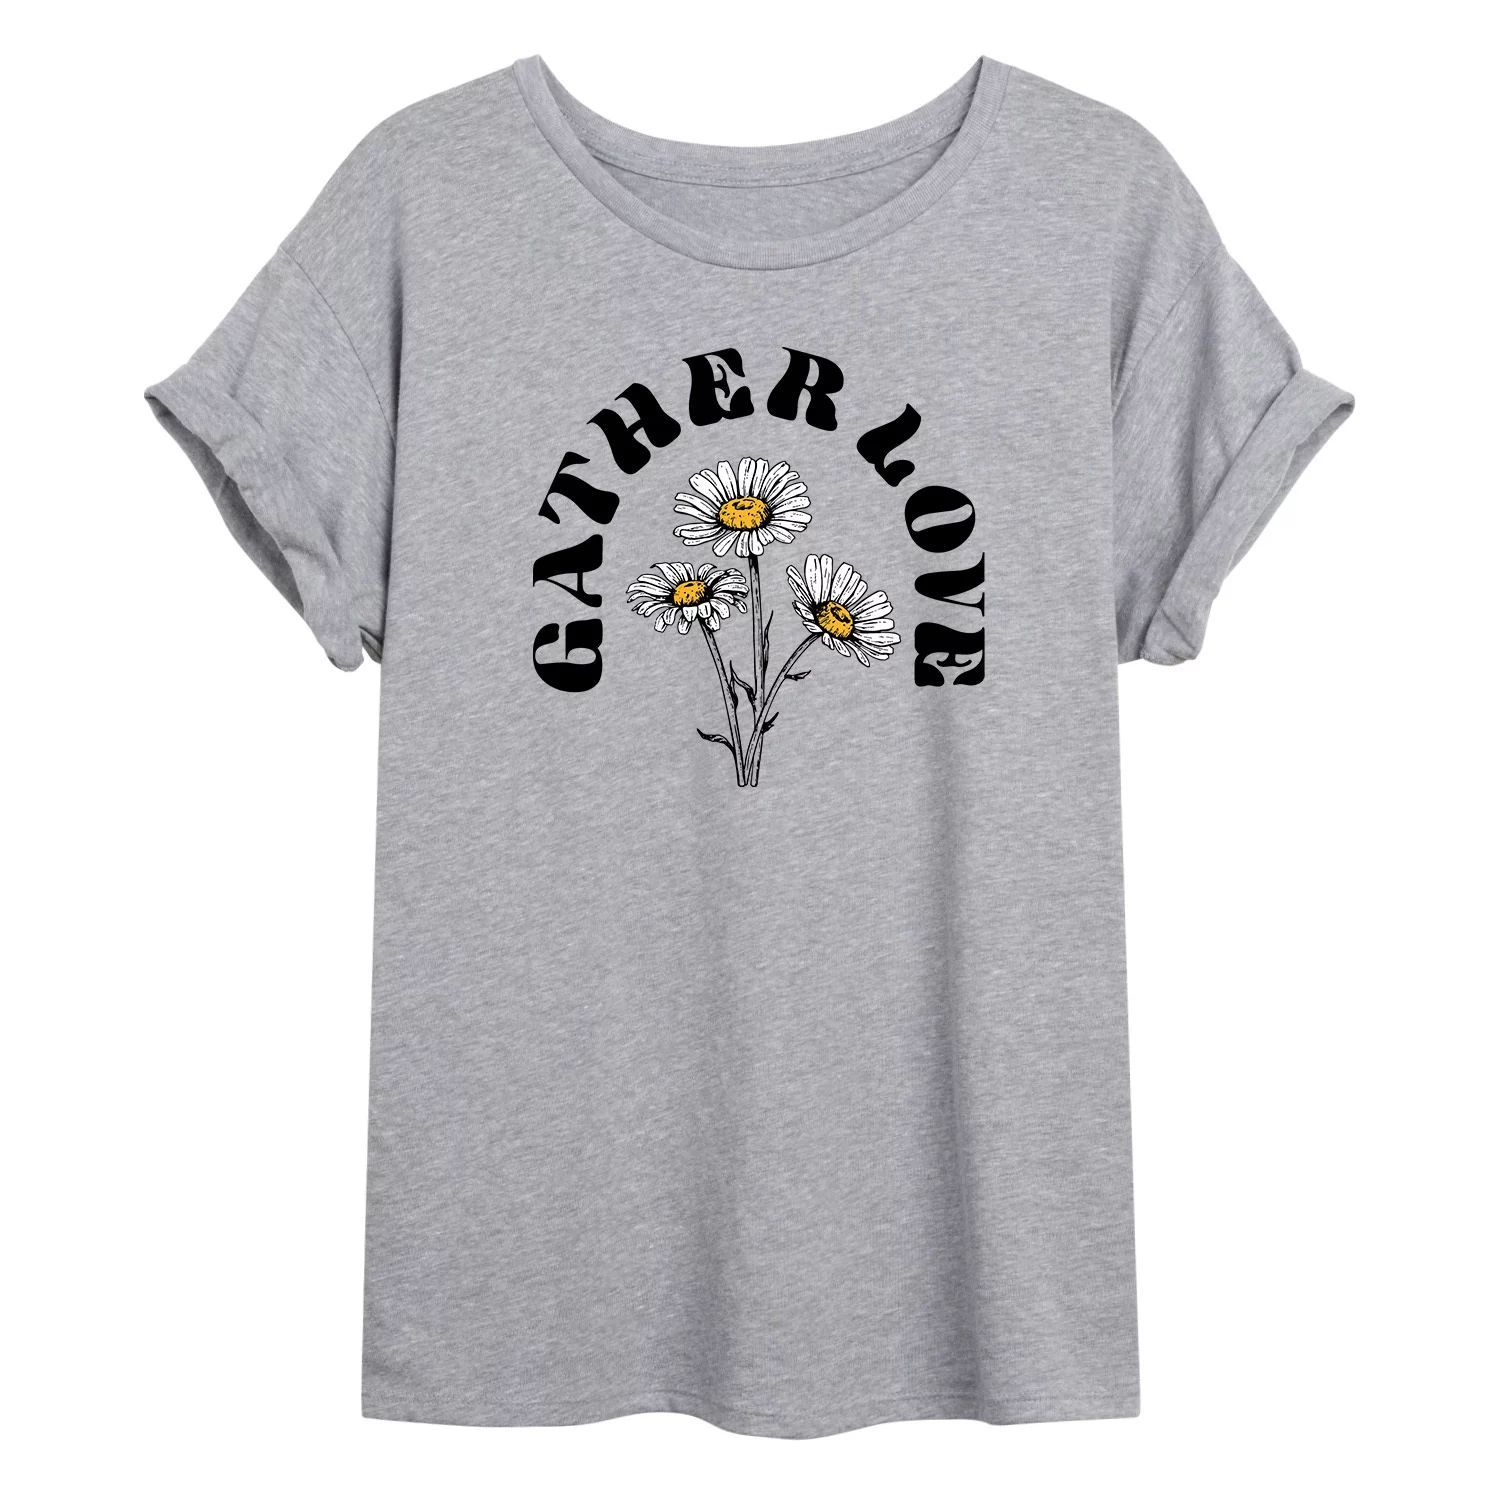 Размерная футболка с рисунком Gather Love Daisies для детей Juniors' Gather Love Daisies Licensed Character